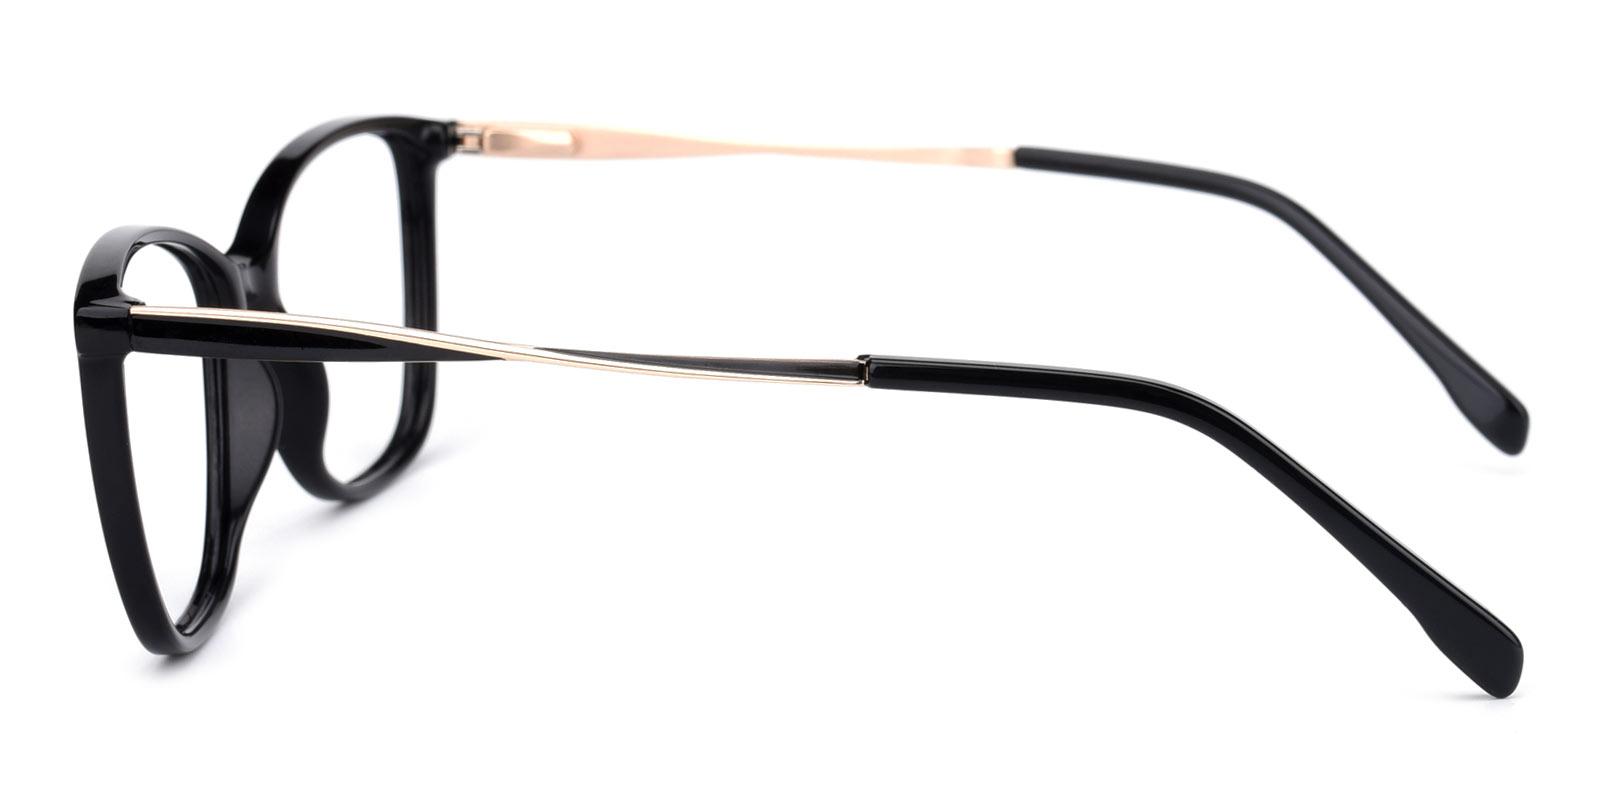 Night-Black-Rectangle / Cat-Acetate-Eyeglasses-detail